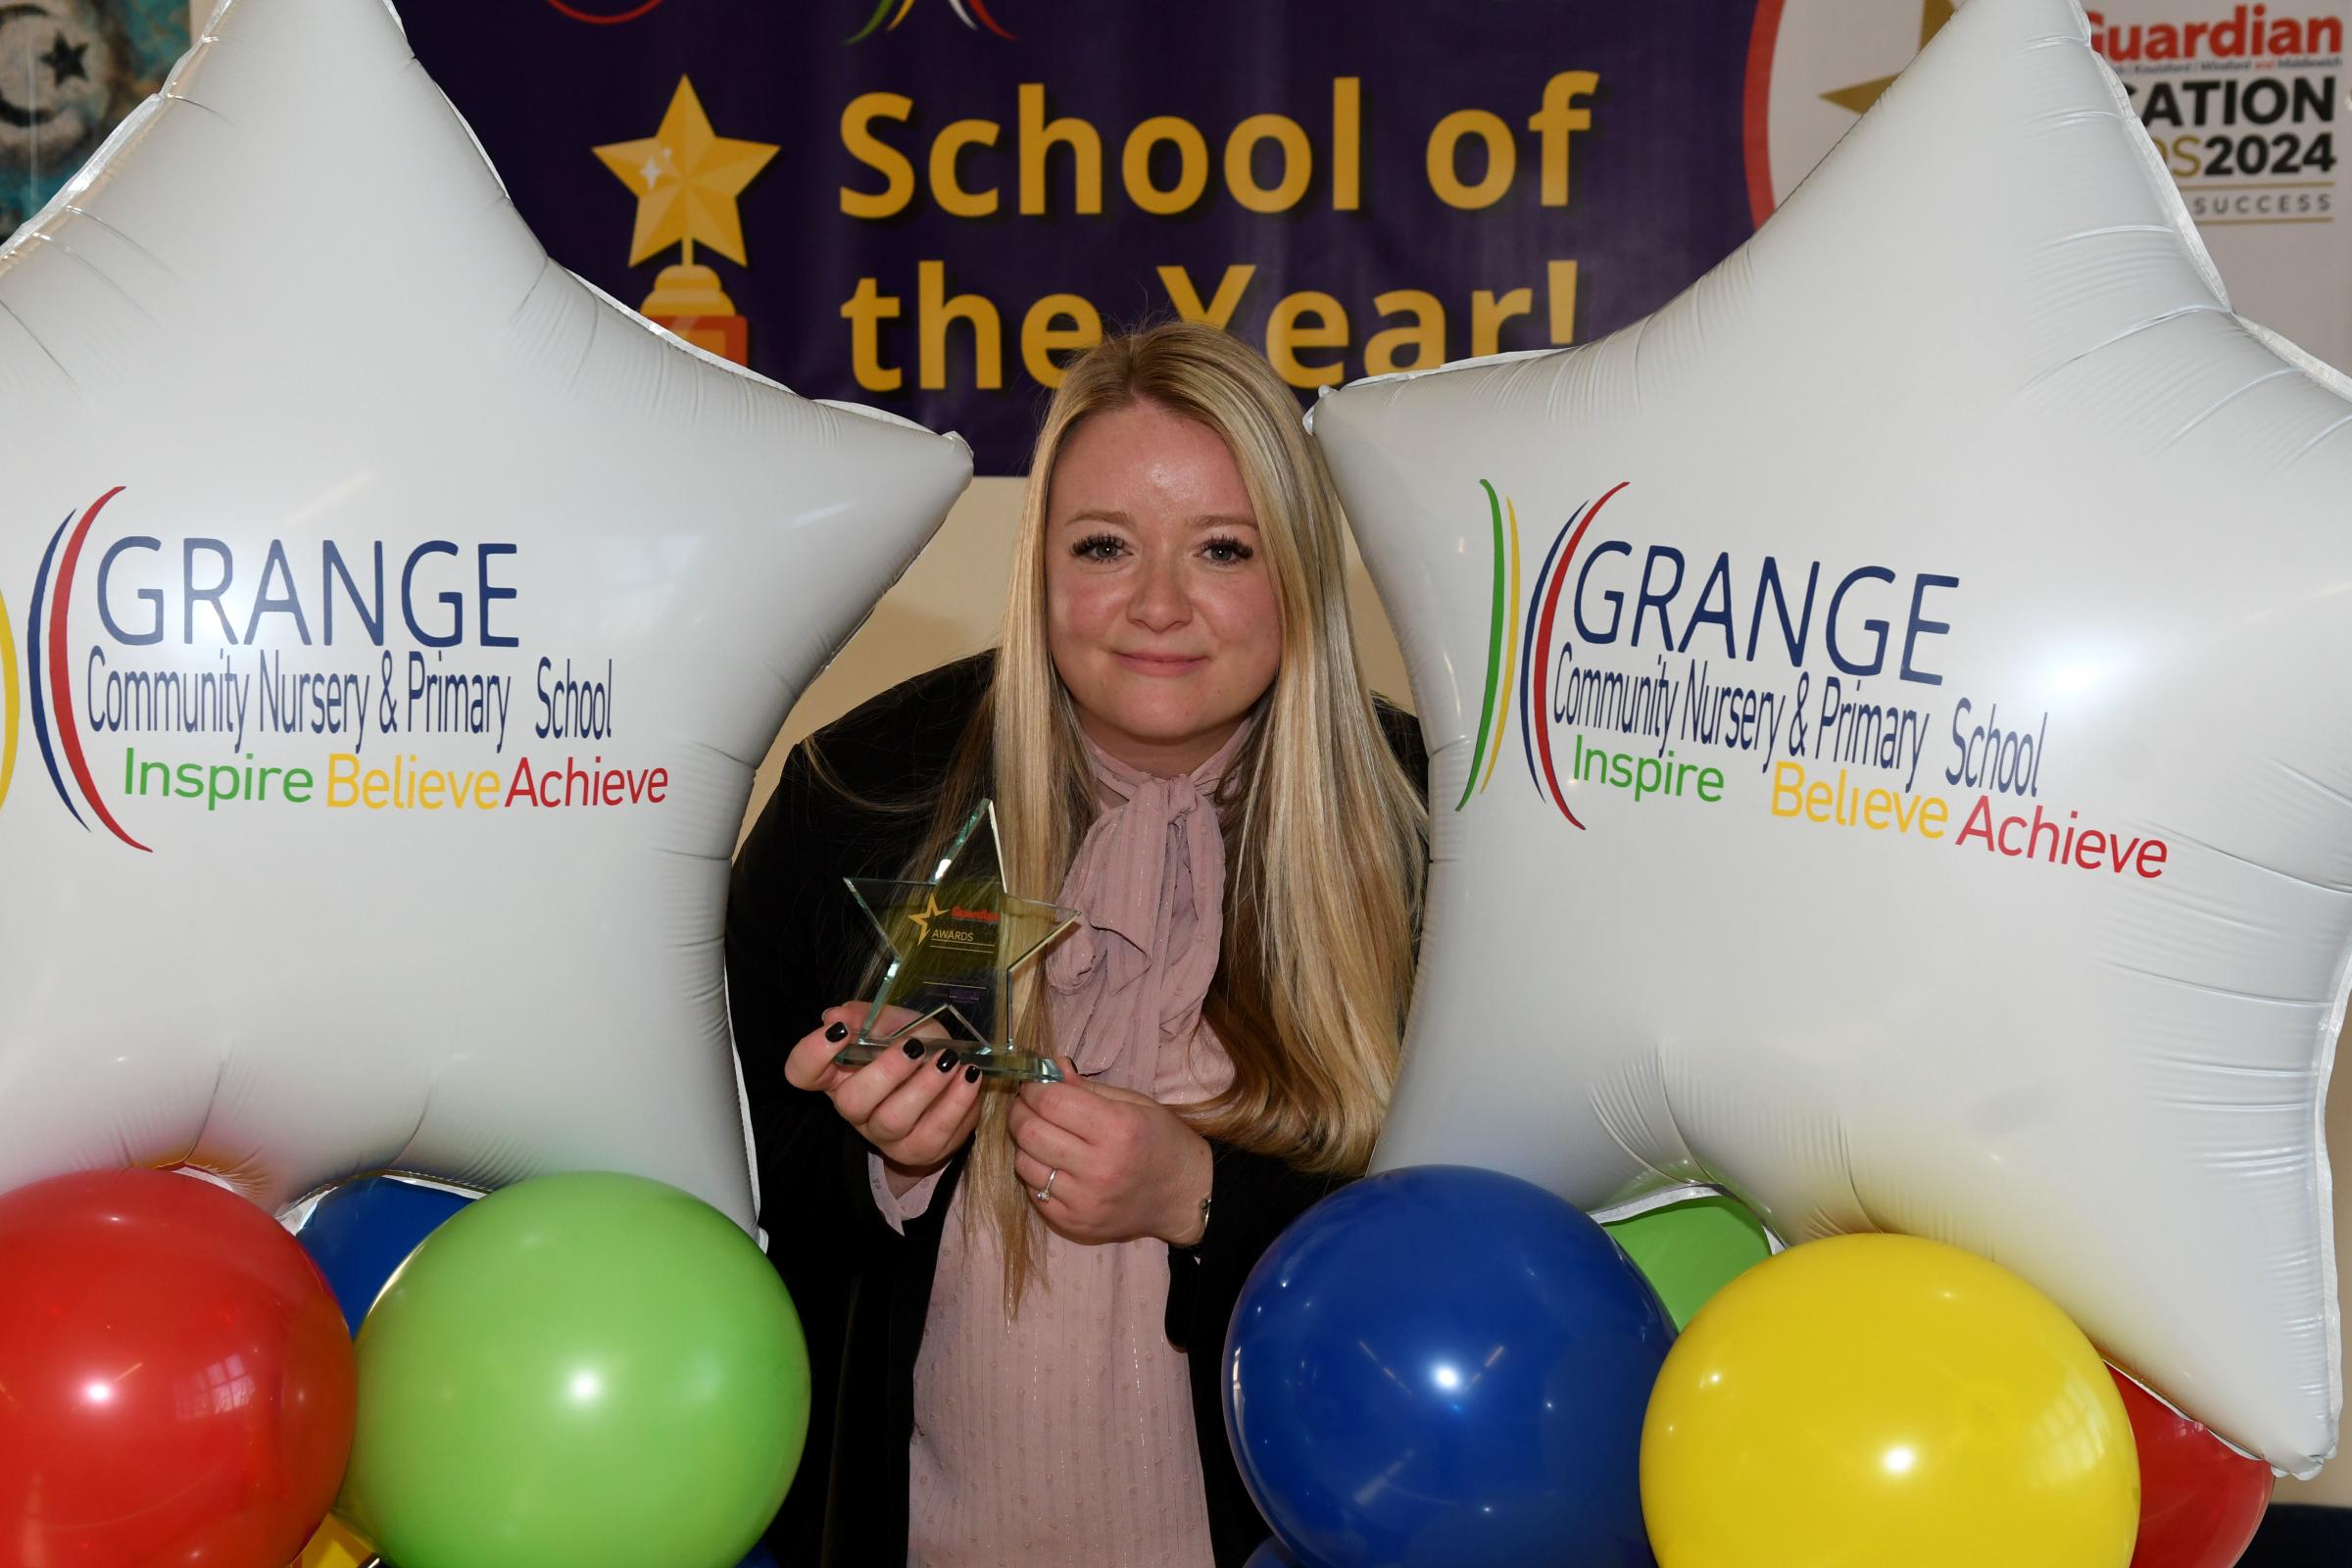 Headteacher of the Year winner Sara Albiston at Grange Community Nursery and Primary School